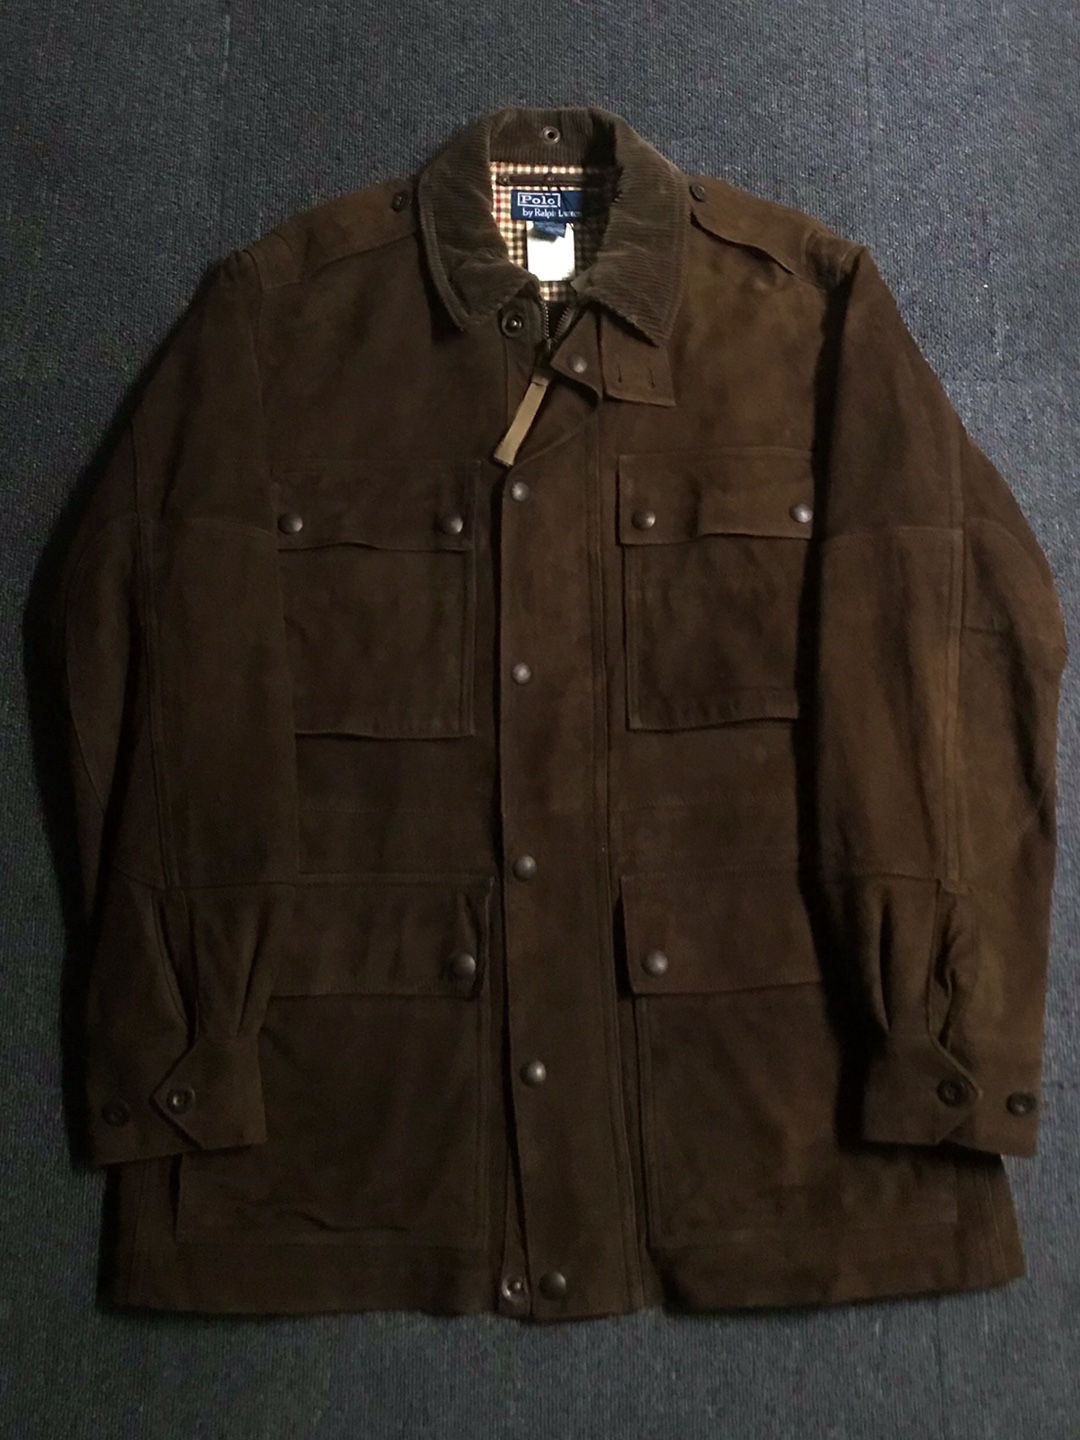 Polo RL goatskin leather field jacket (L size, ~105 추천)